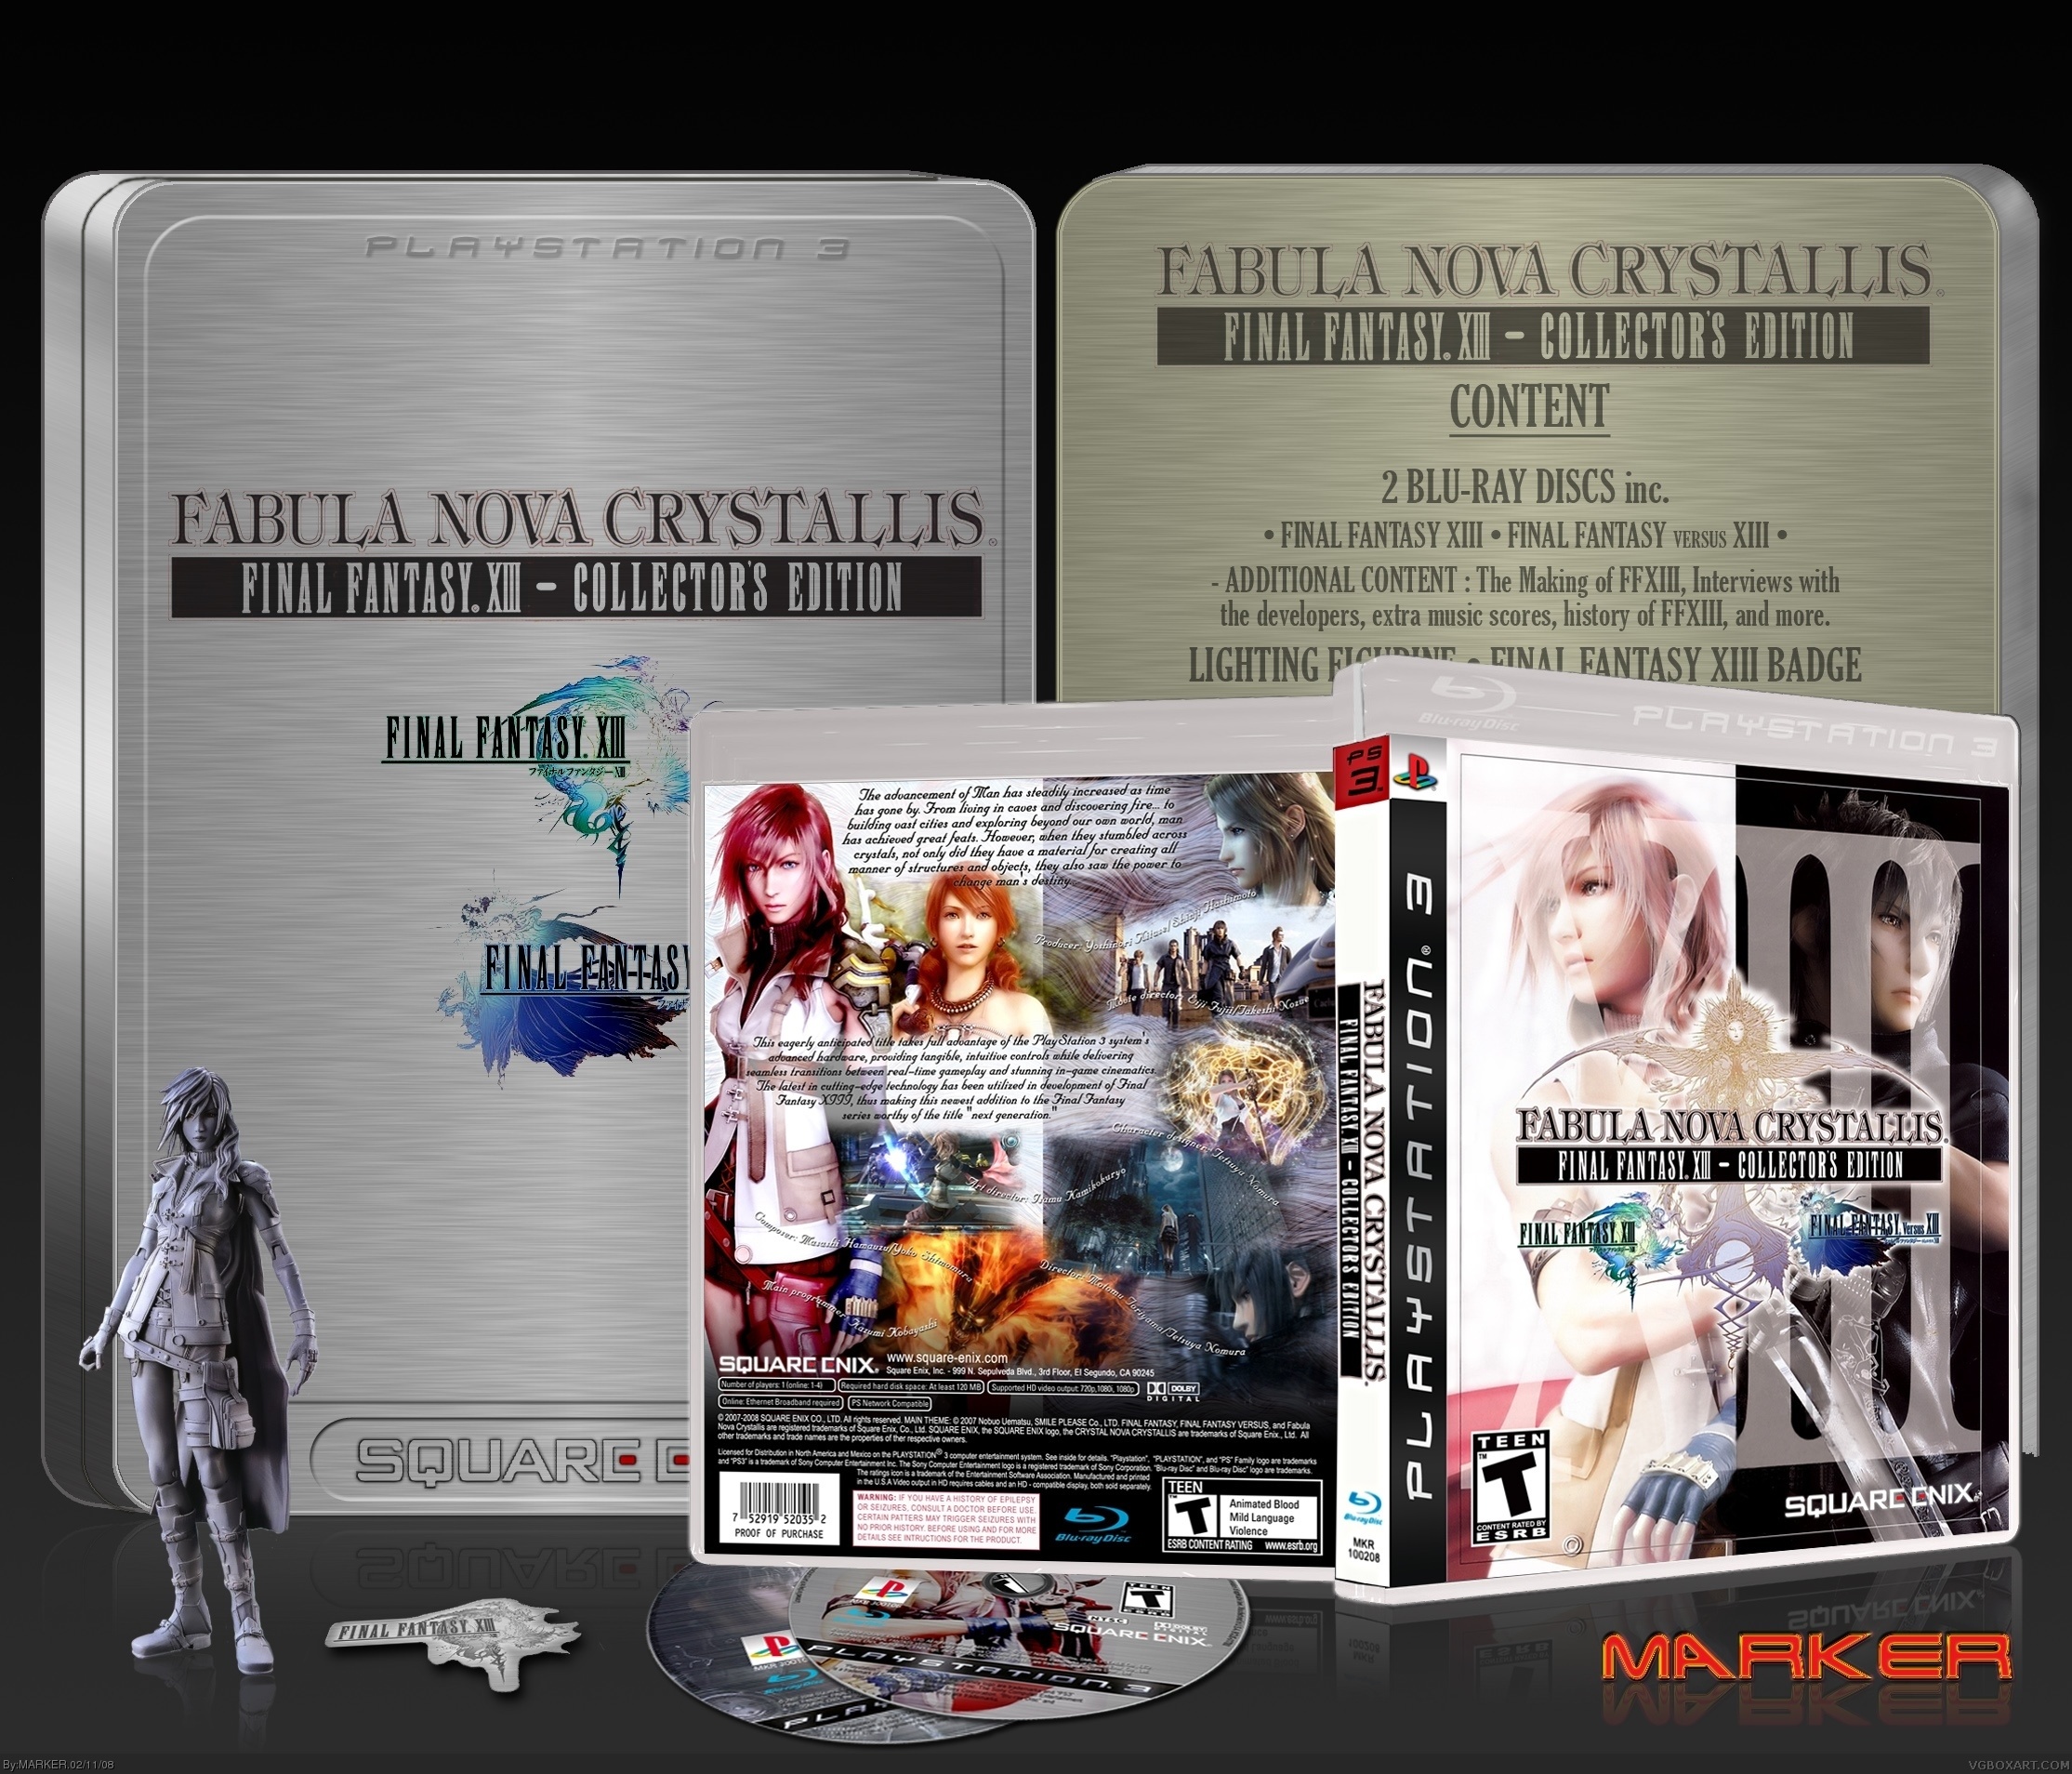 Final Fantasy XIII Collector's Edition box cover